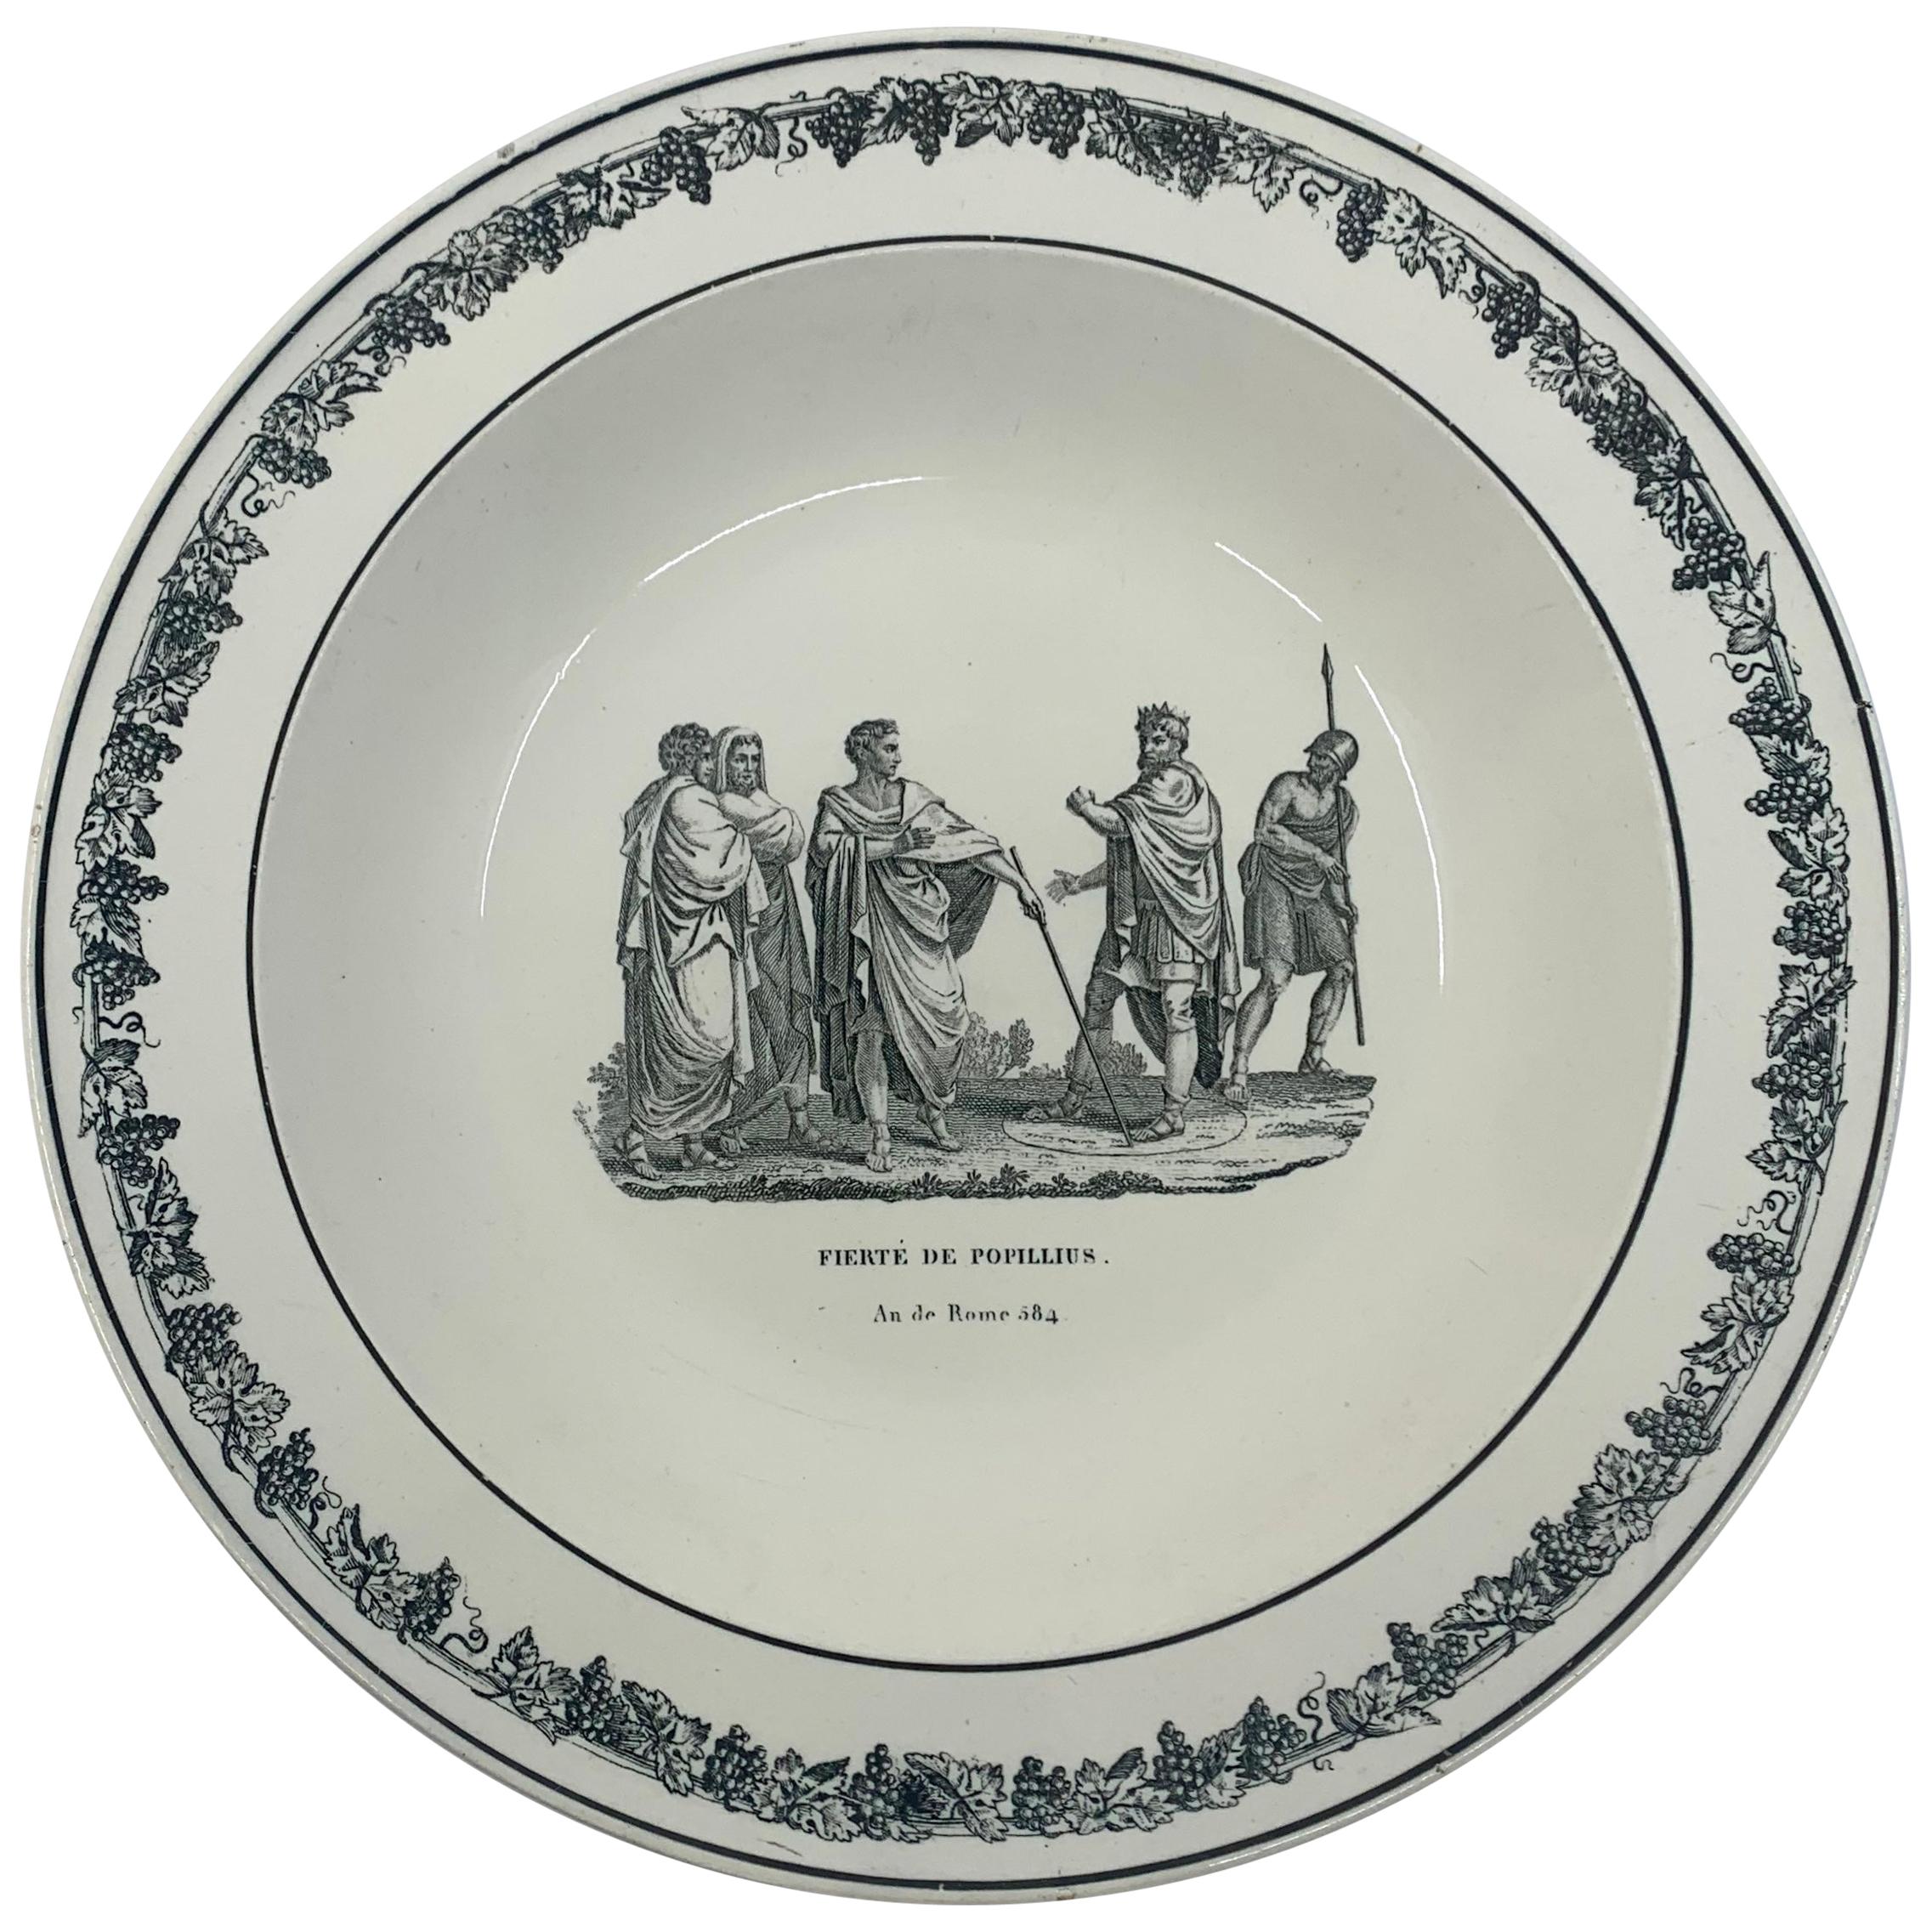 Neoclassical Creil Creamware Plate